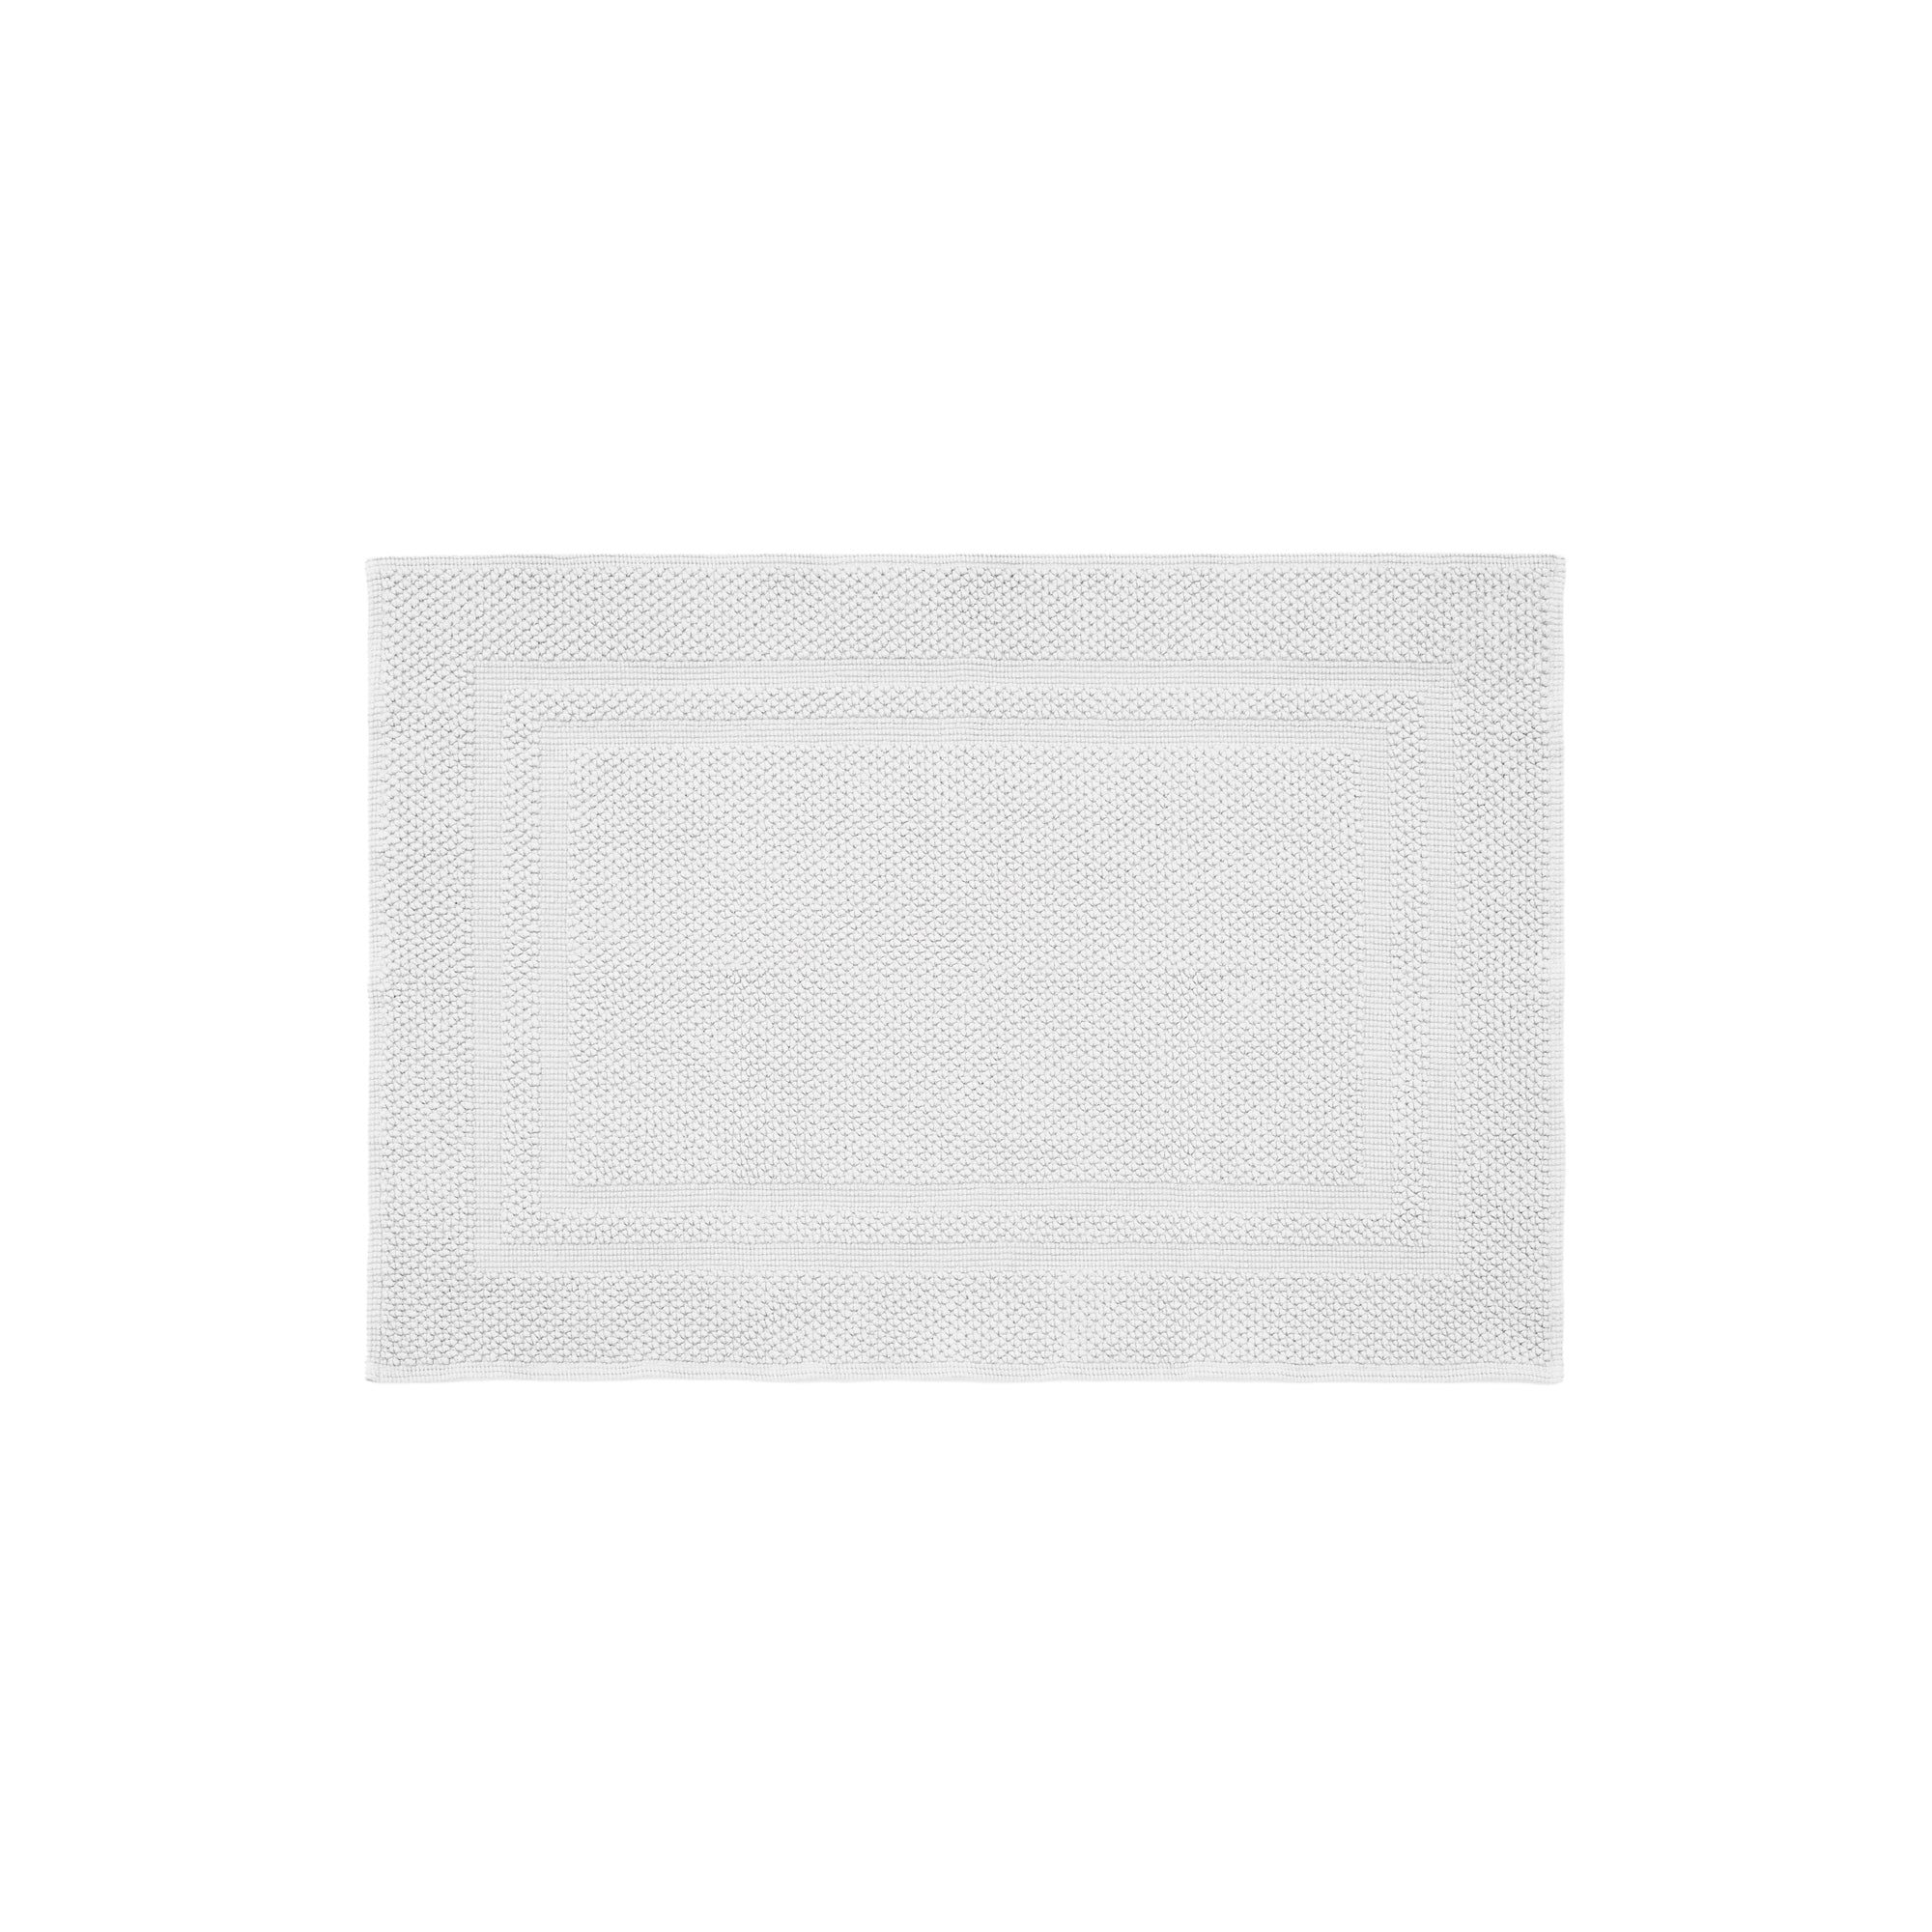 Yanay 100% cotton bath mat in white, 50 x 70 cm